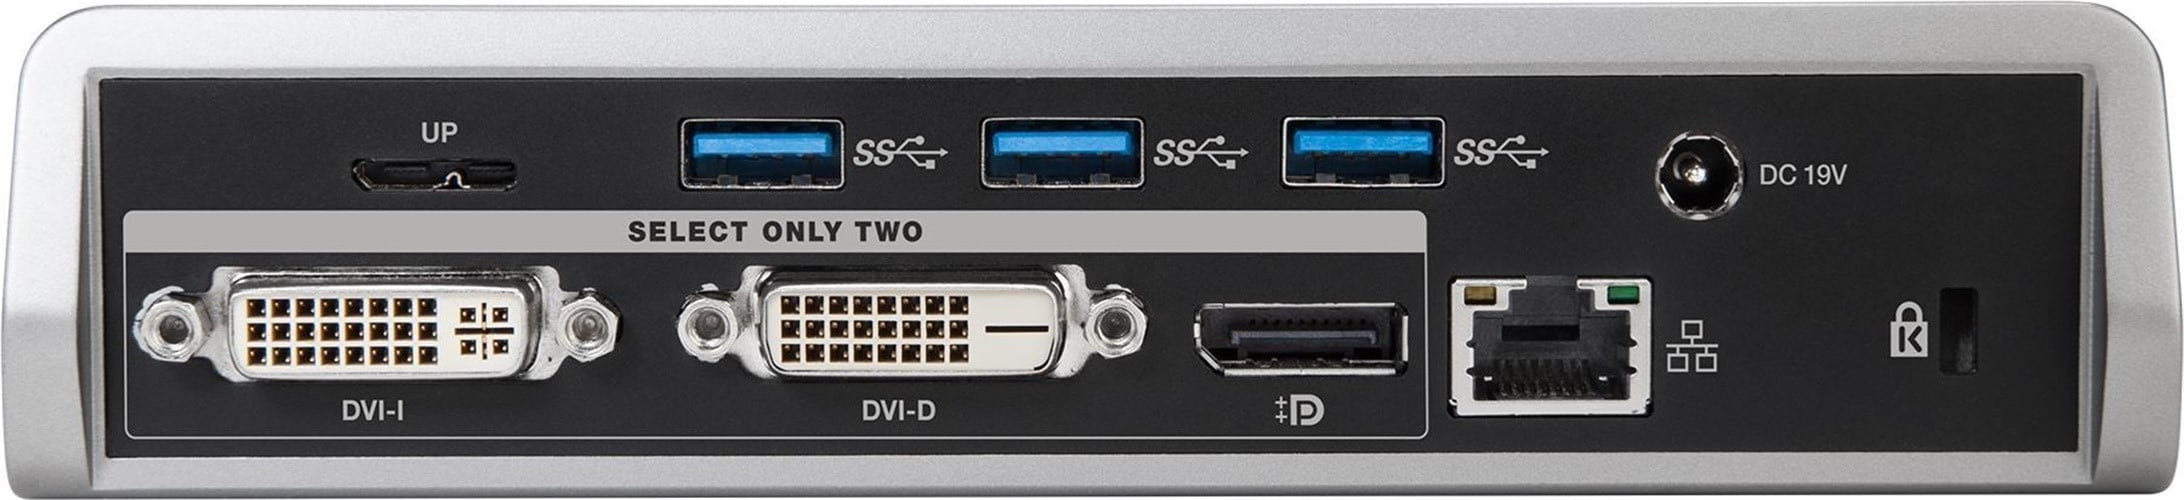 Targus DOCK130USZ Docking Station USB 3.0-6 x USB Ports for Notebook 